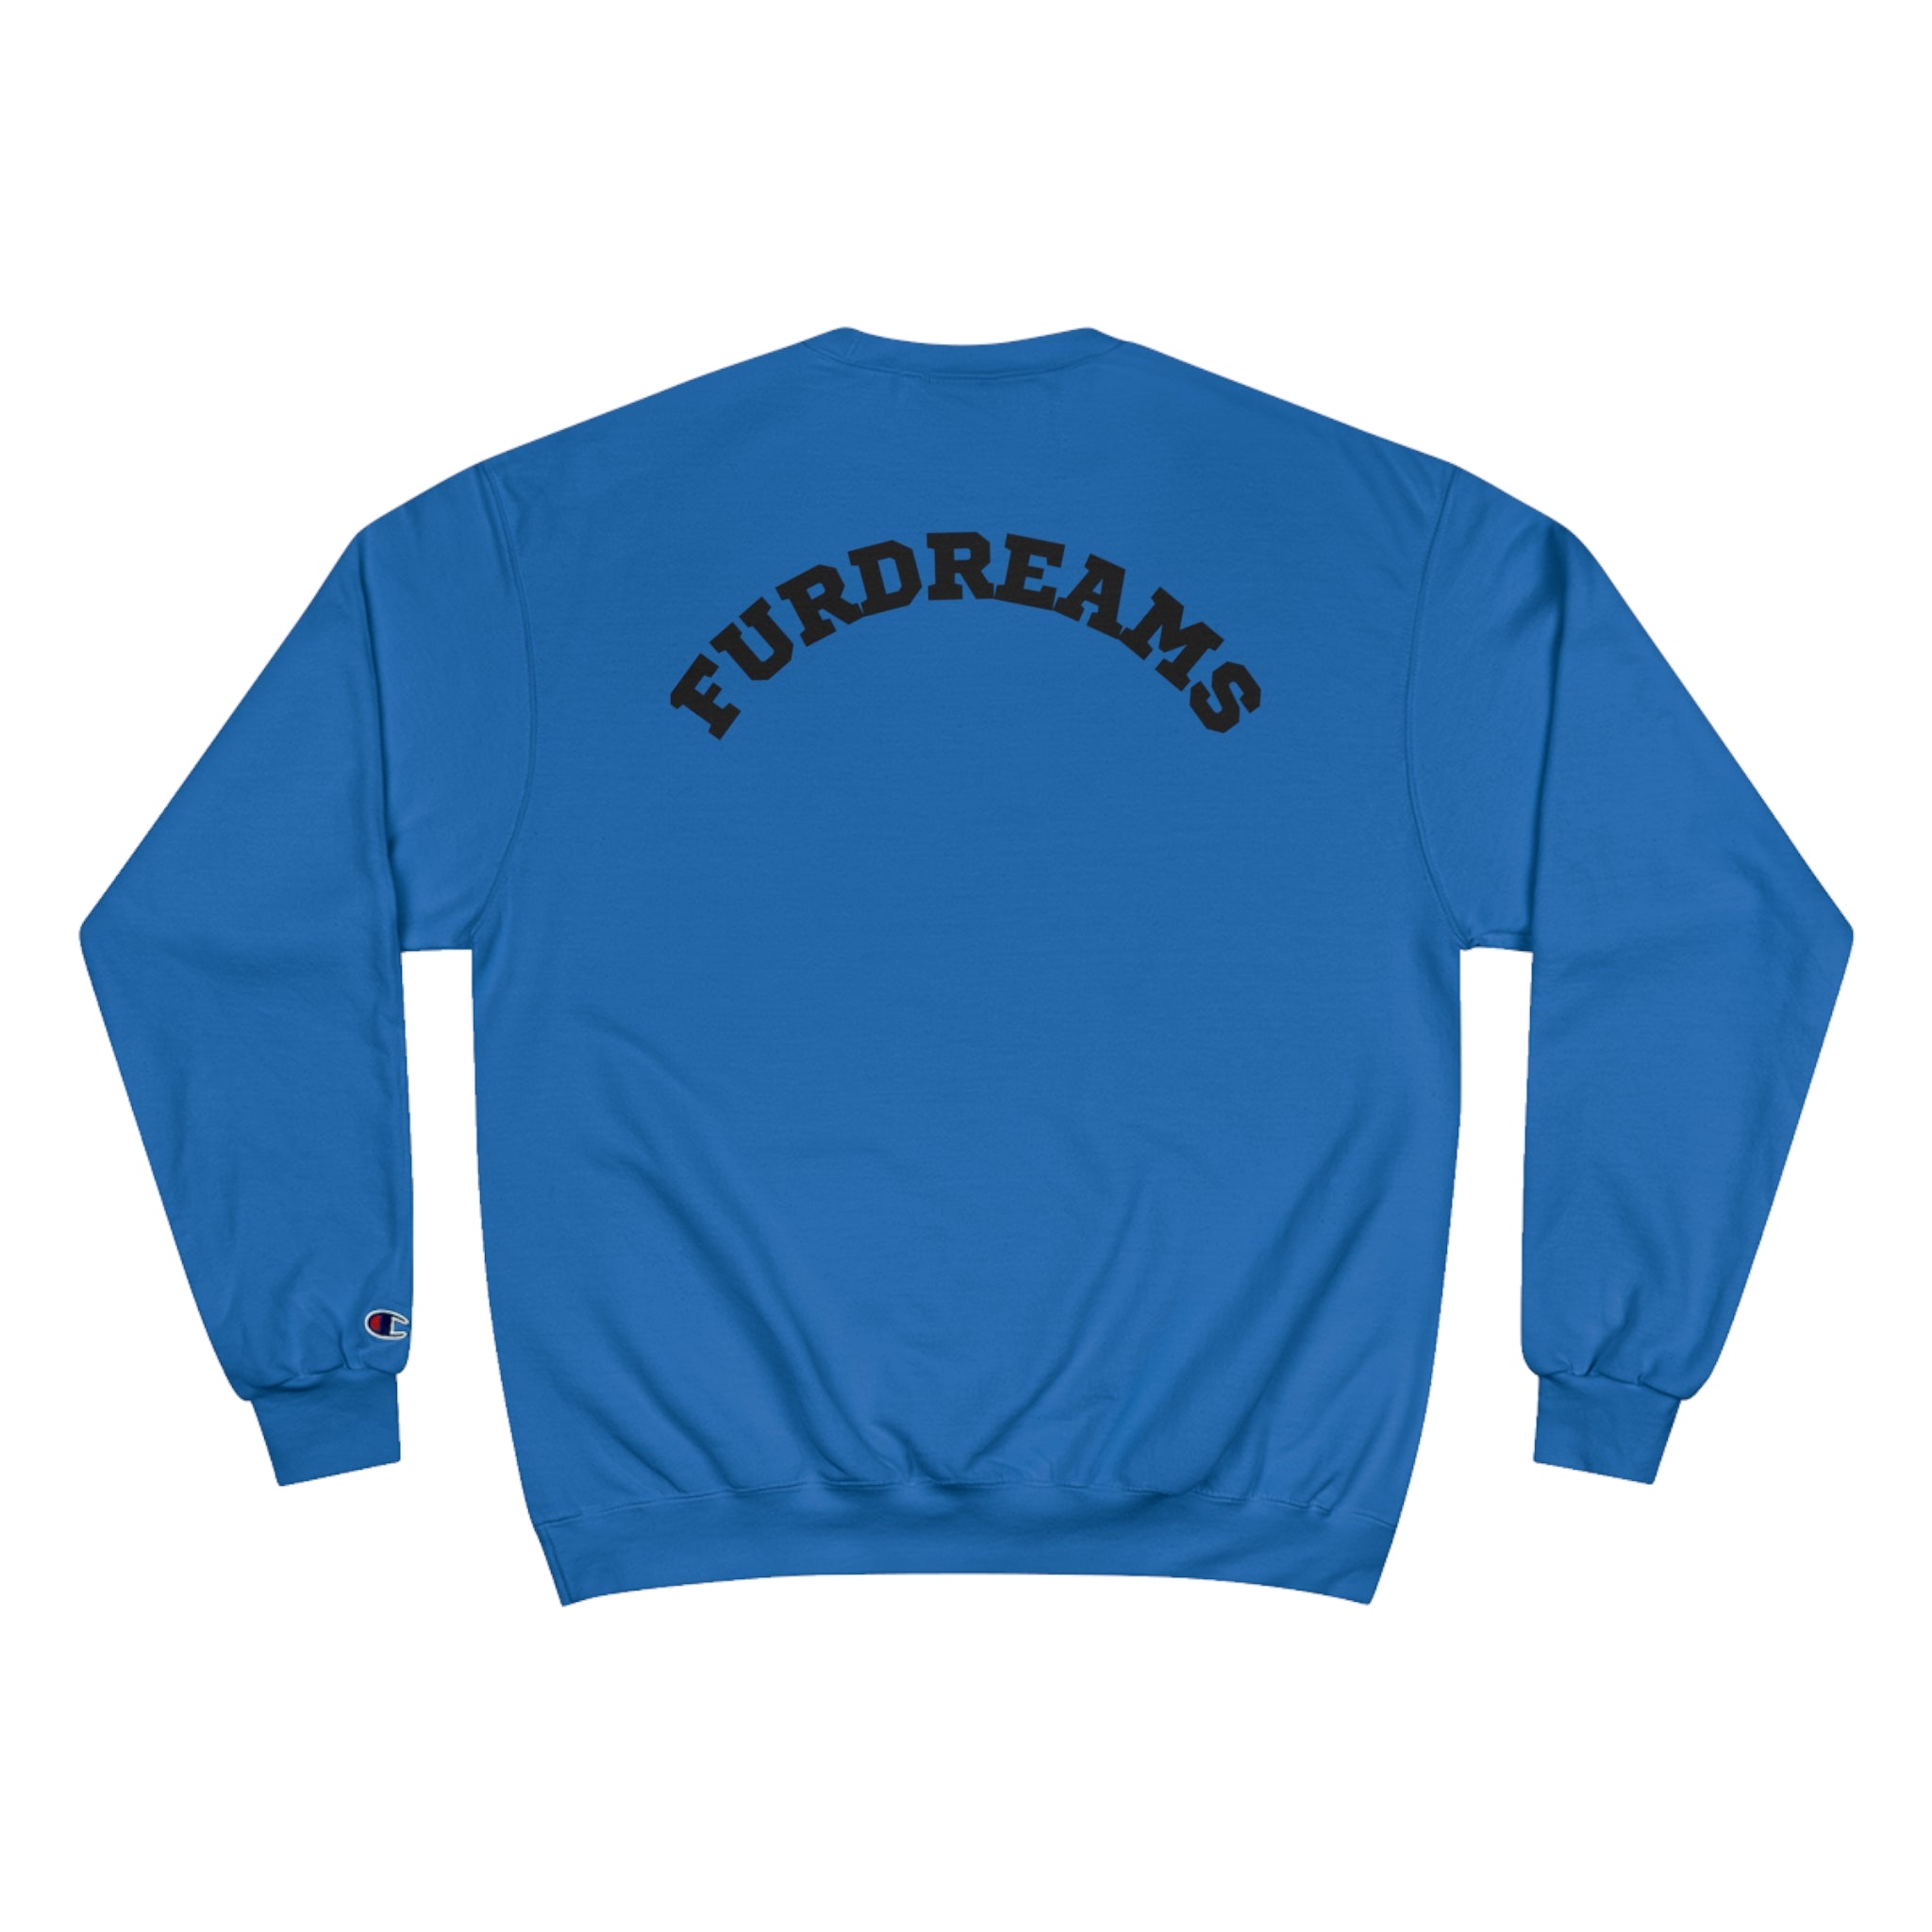 Lady FURDreams “BWI” VI Champion Sweatshirt